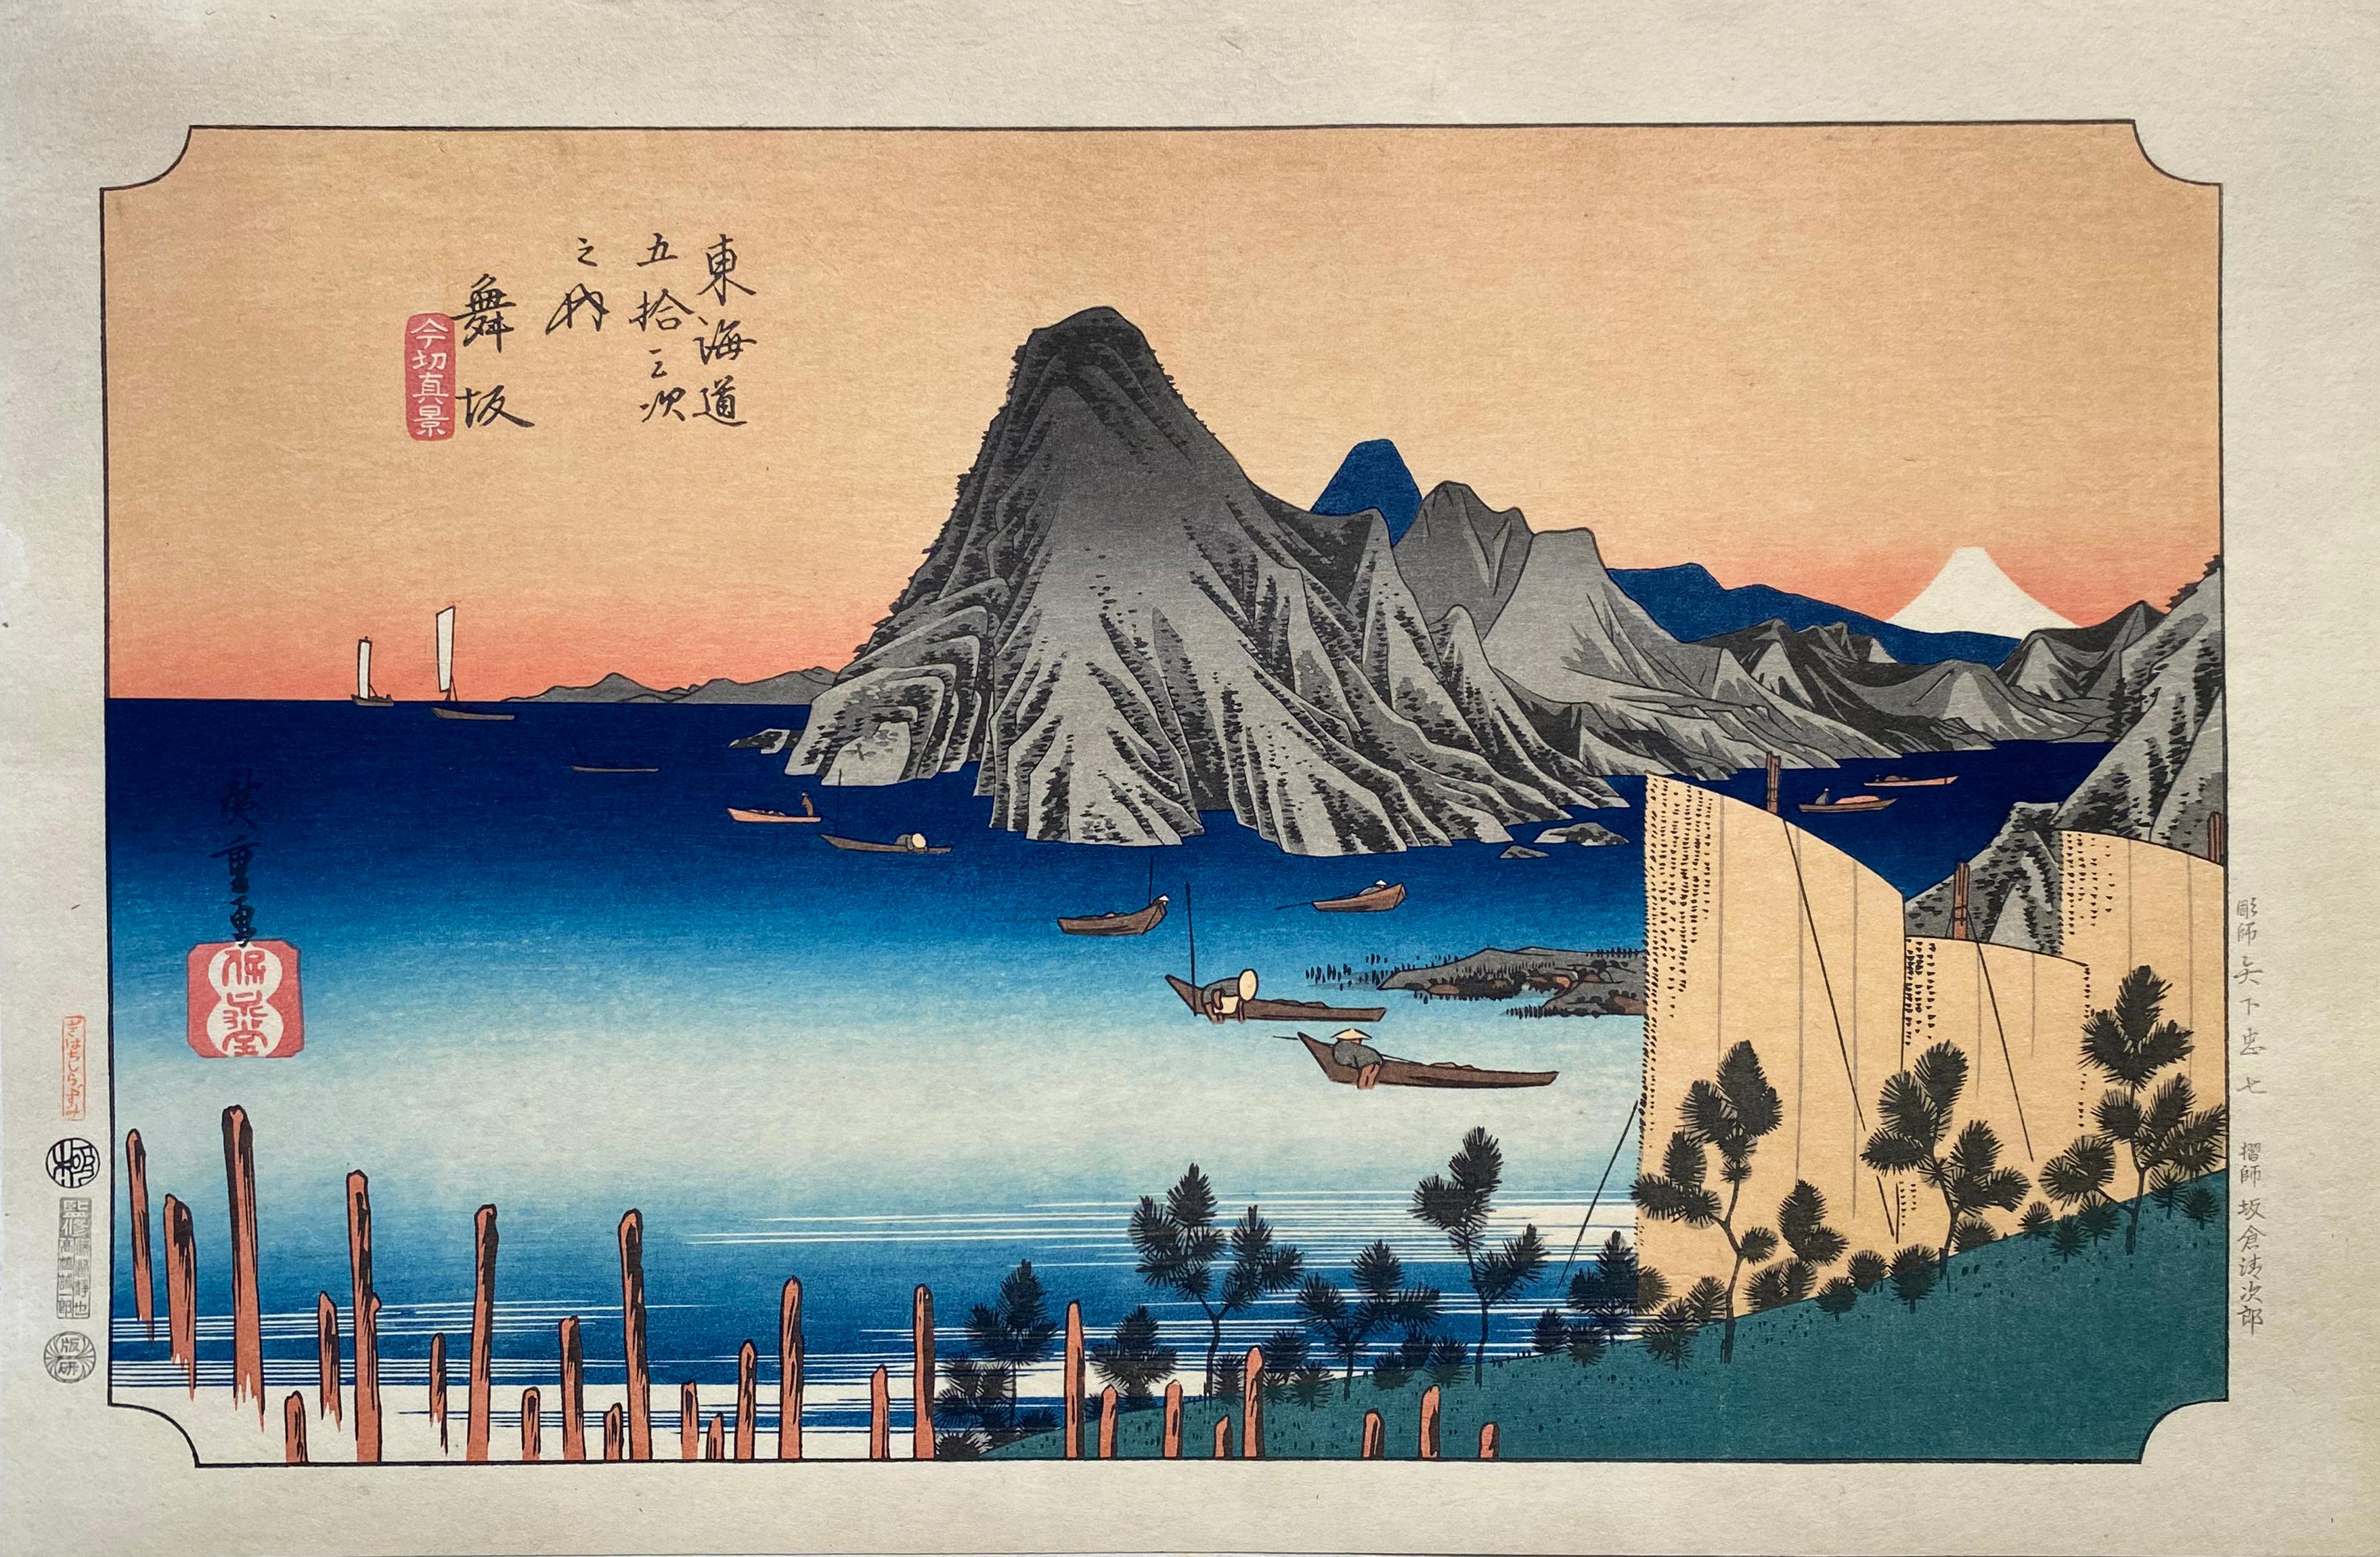 Utagawa Hiroshige (Ando Hiroshige) Landscape Print - 'View of Imagiri', After Utagawa Hiroshige 歌川廣重, Ukiyo-e Woodblock, Tokaido